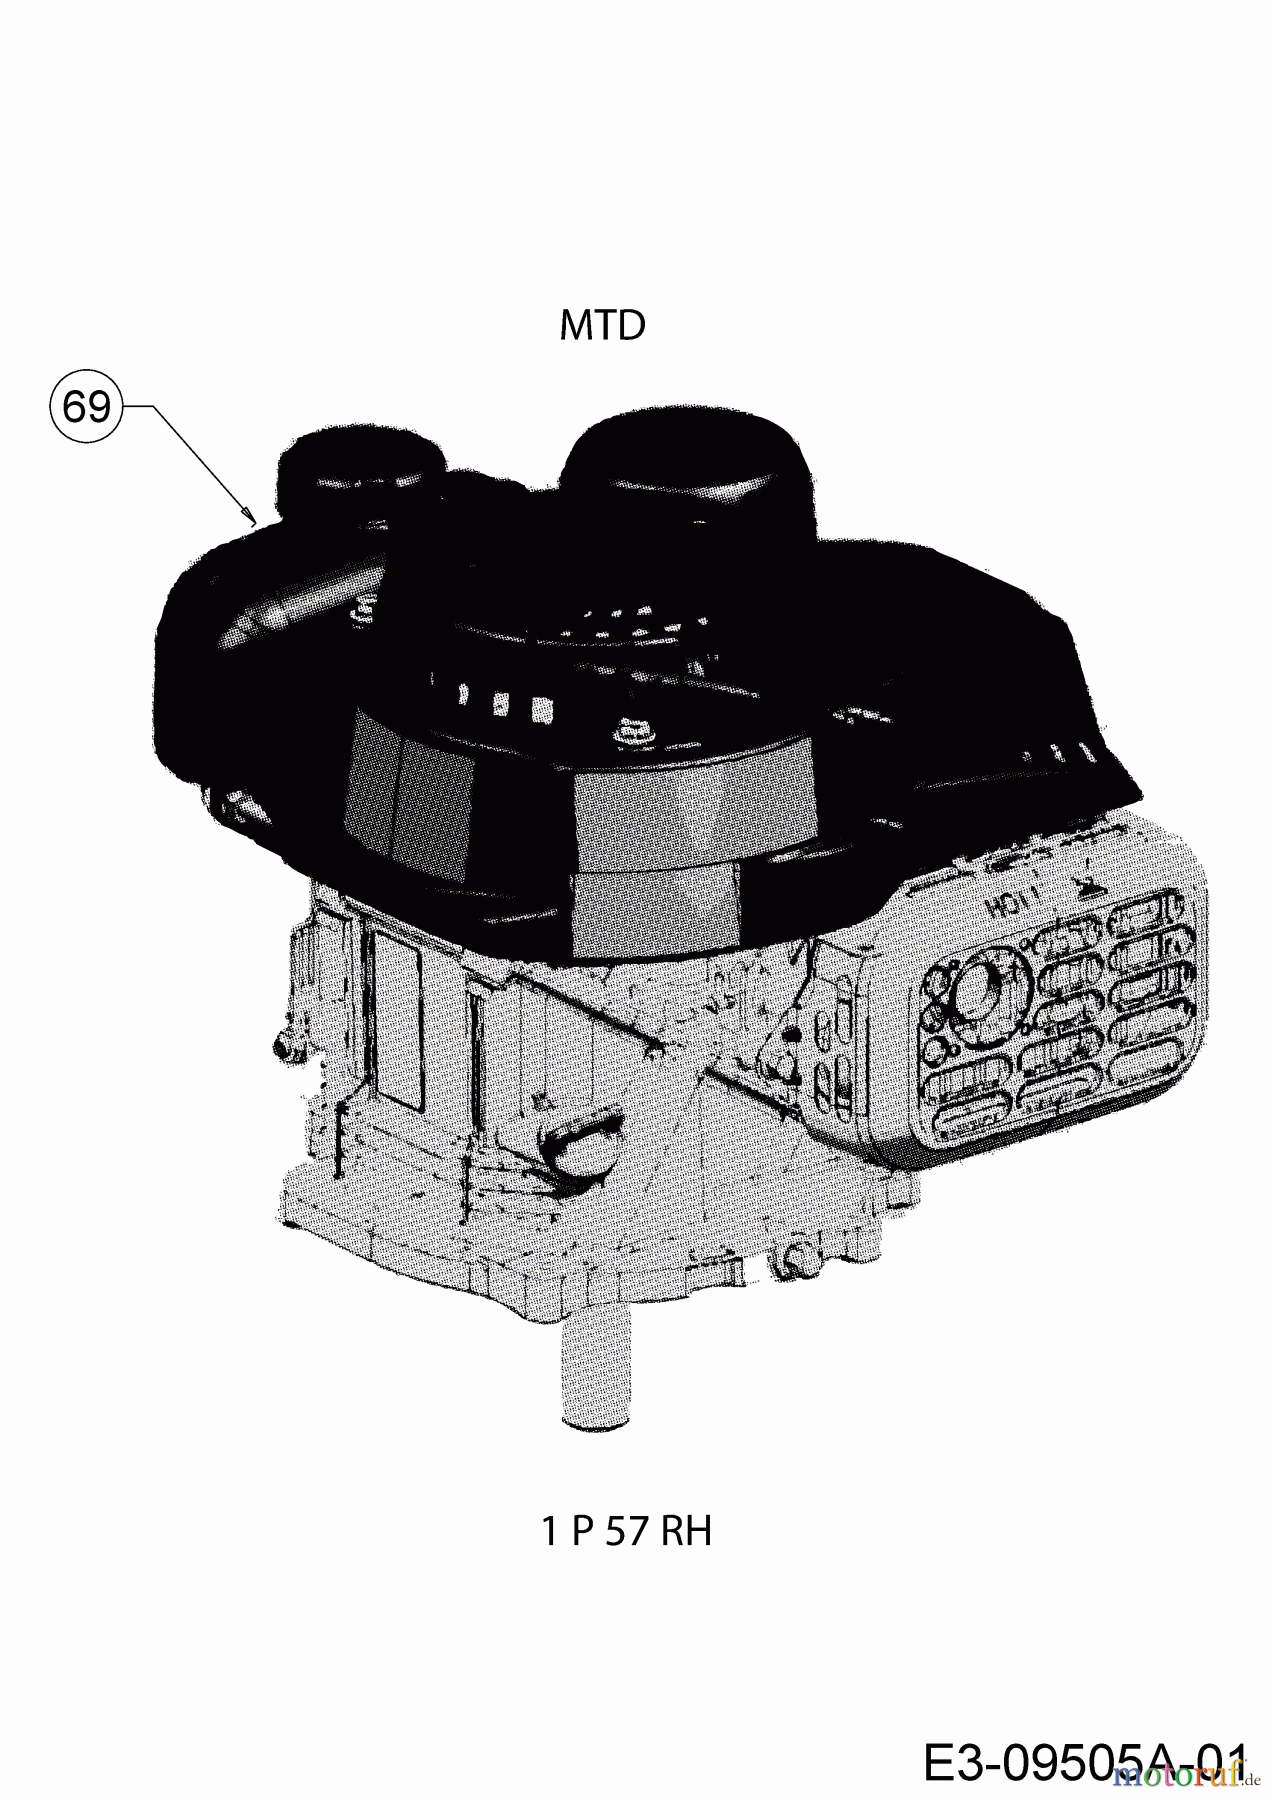  MTD Petrol mower Smart G 46 MO 11E-70SJ600  (2018) Engine MTD